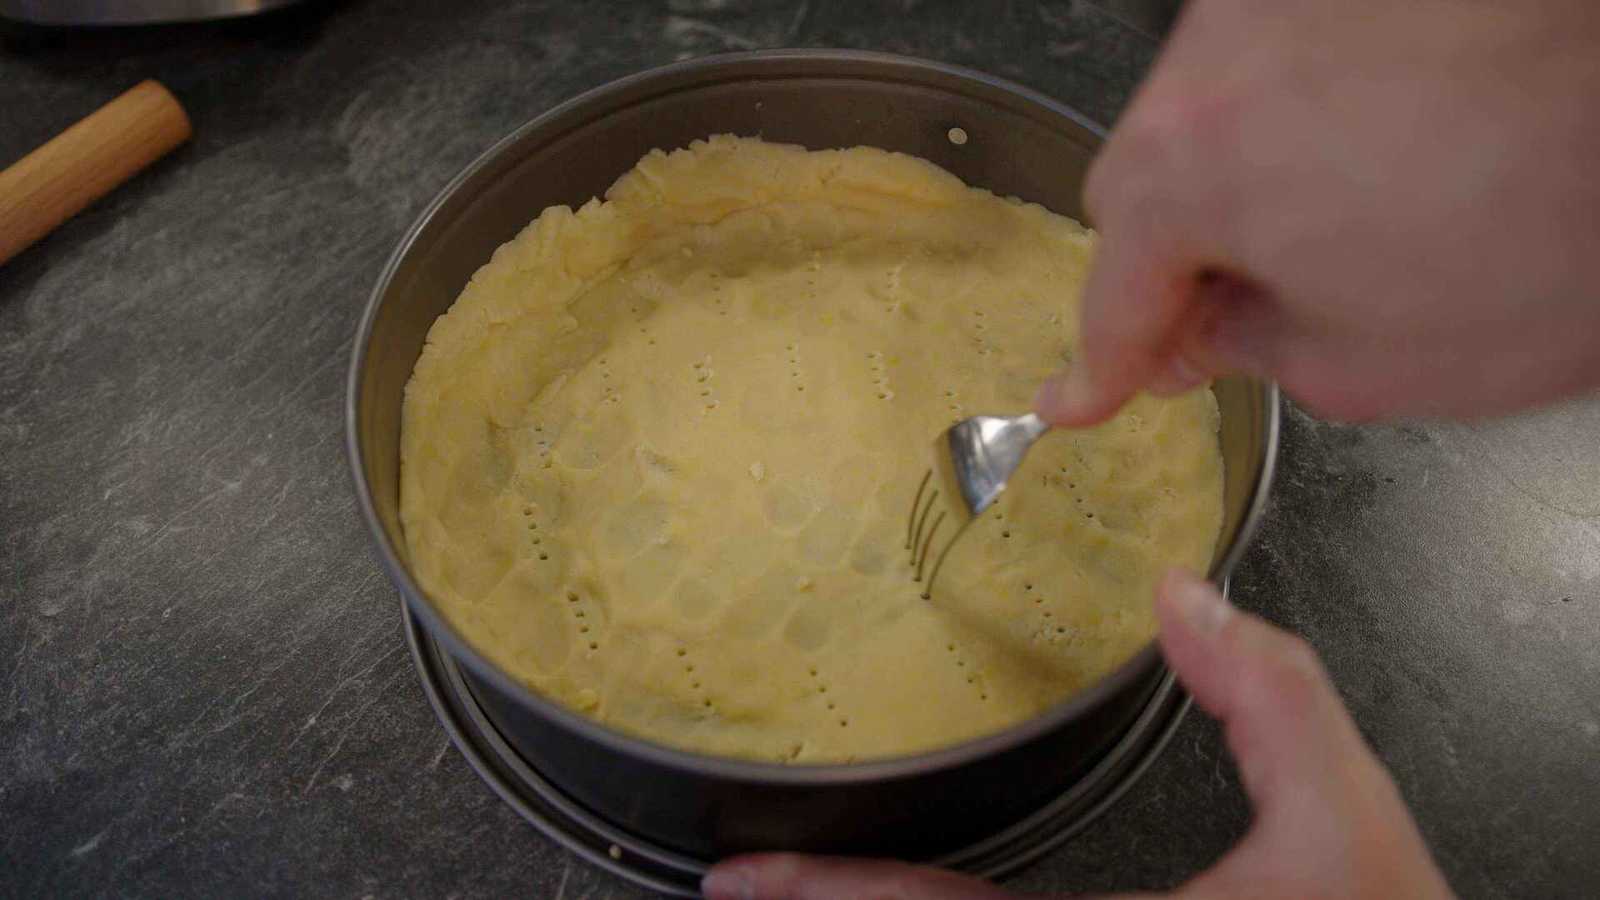 Stabbing the dough